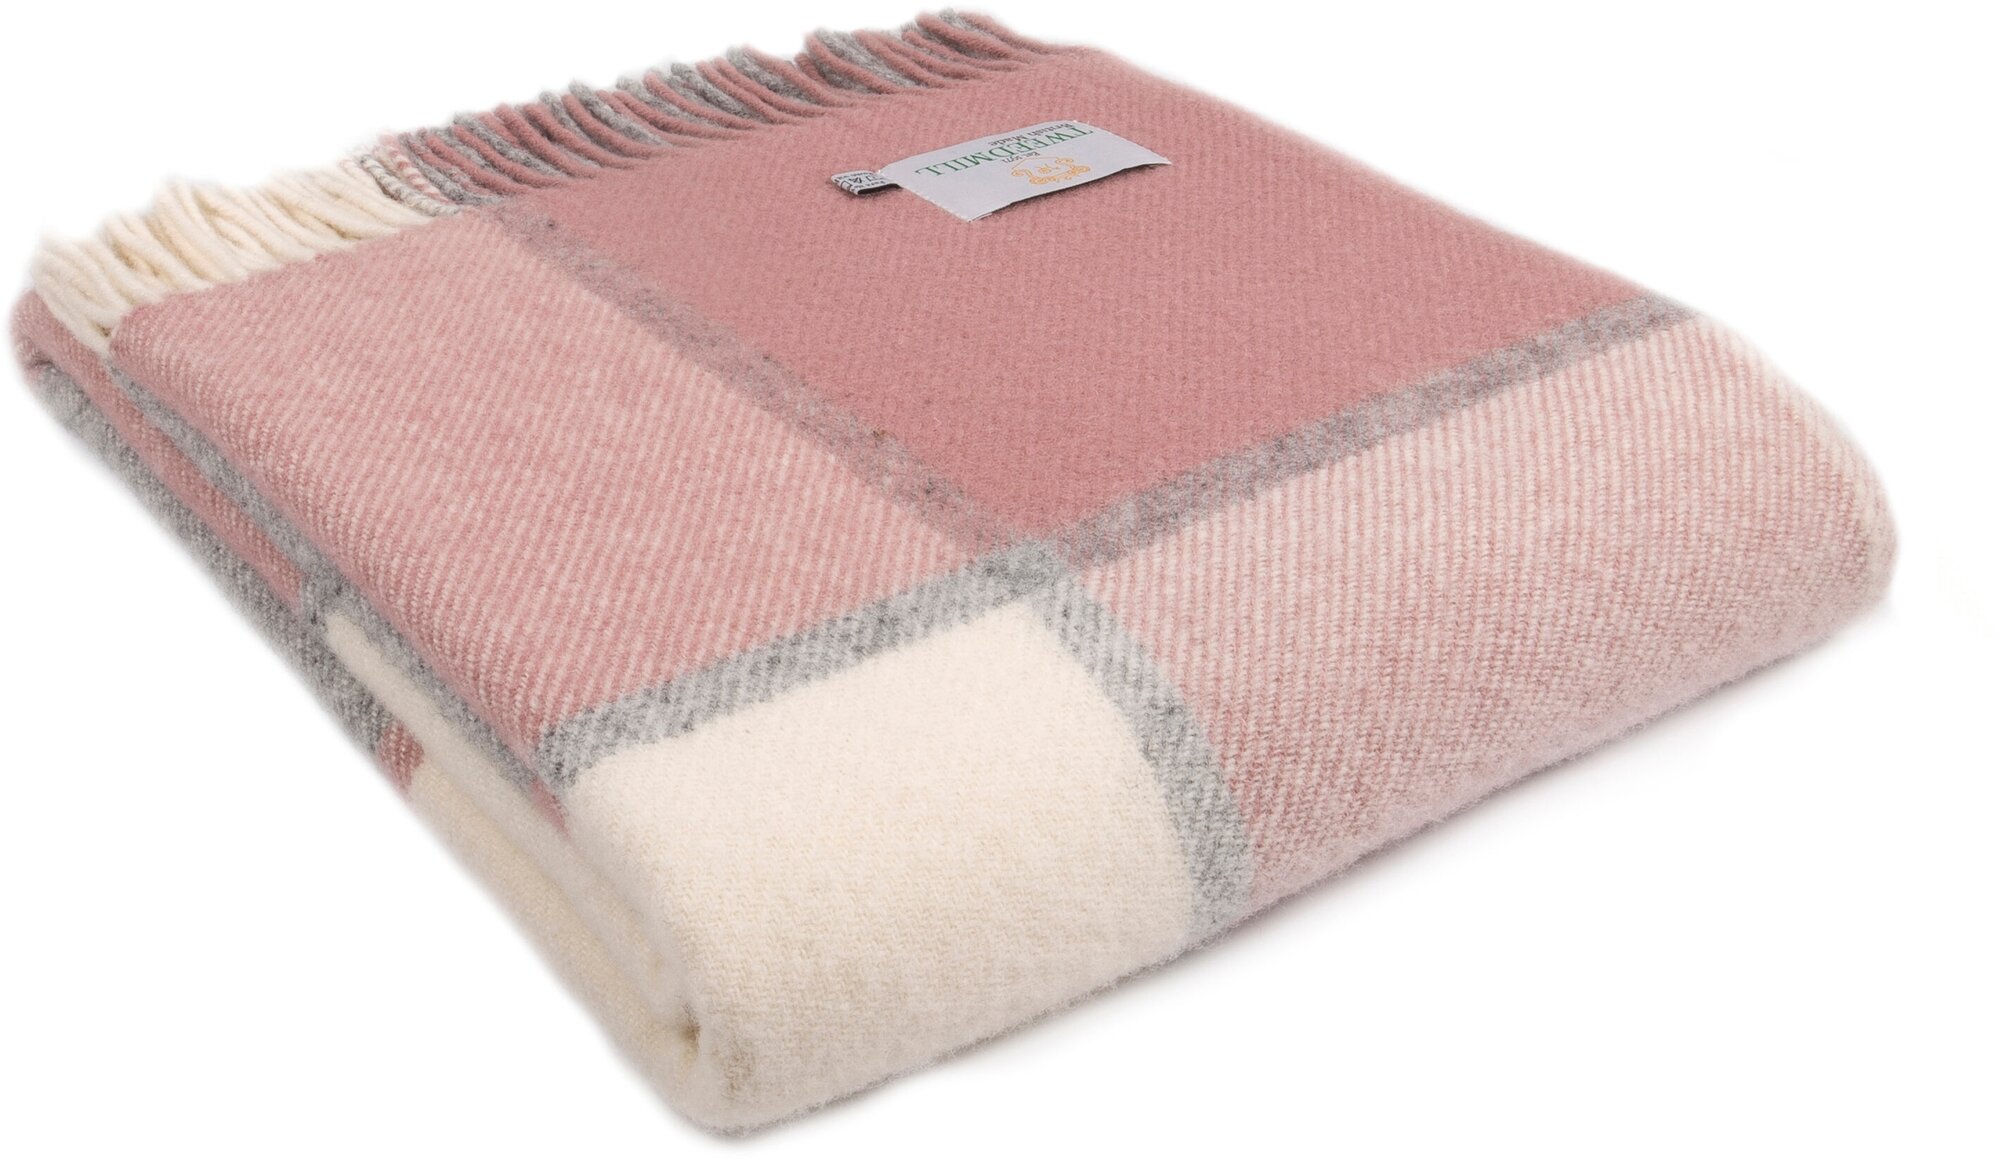 Плед шерстяной Tweedmill (Великобритания) Lifestyle - Block Check - Сharcoal&Dusky Pink. Произведено в Великобритании.